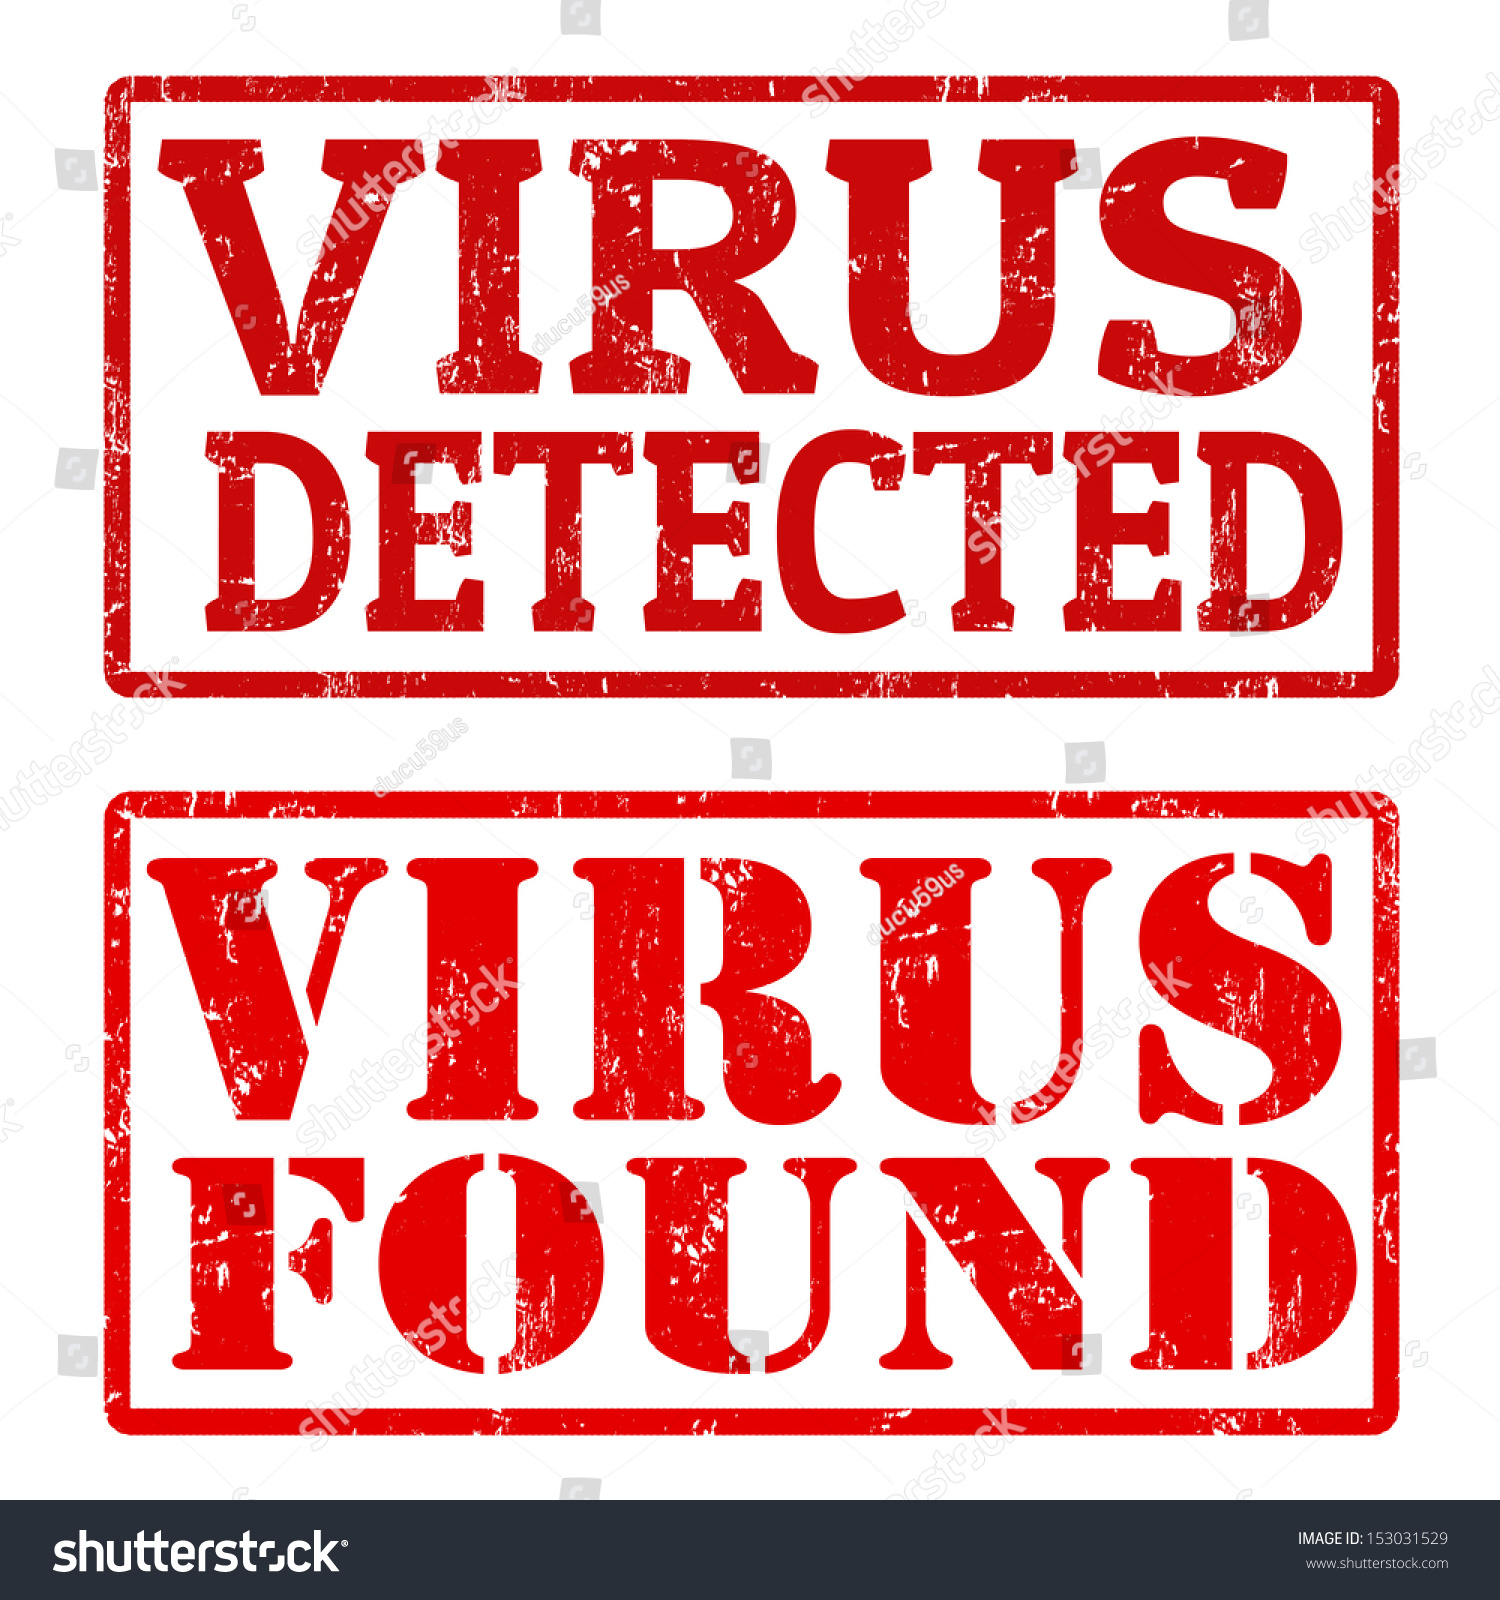 Virus found. Virus detected. Virus detected logo. Testorone virus text caption. Not text virus.